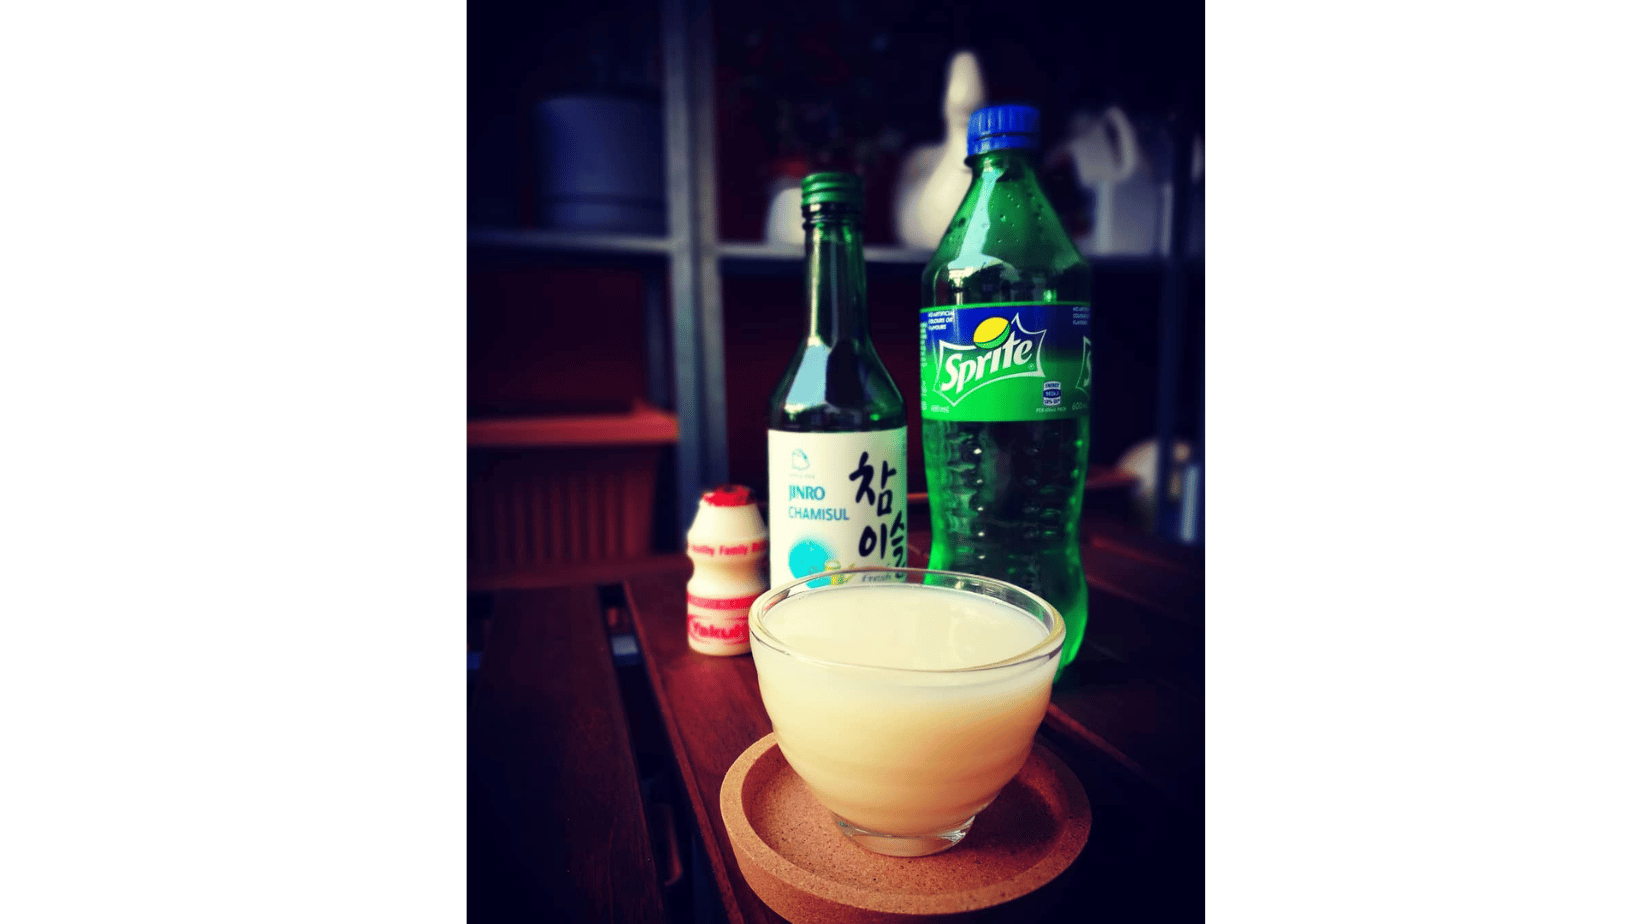 soju cocktail recipes